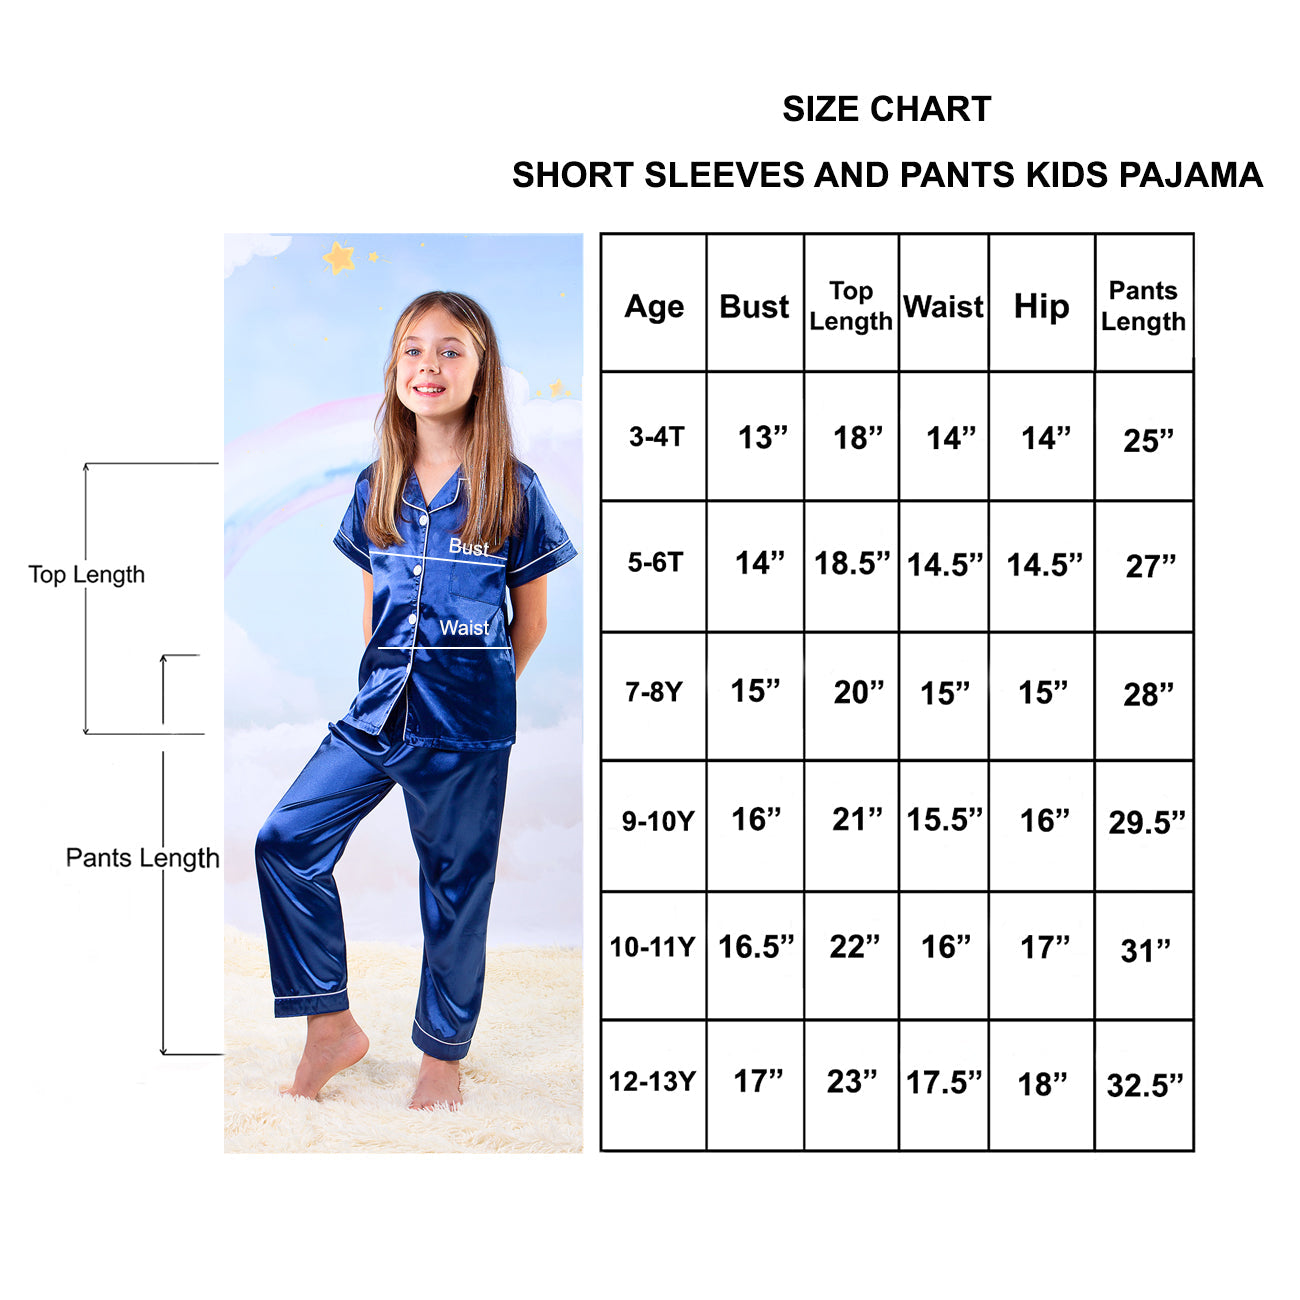 Kids Personalized Pajamas Set, Name or Custom Text